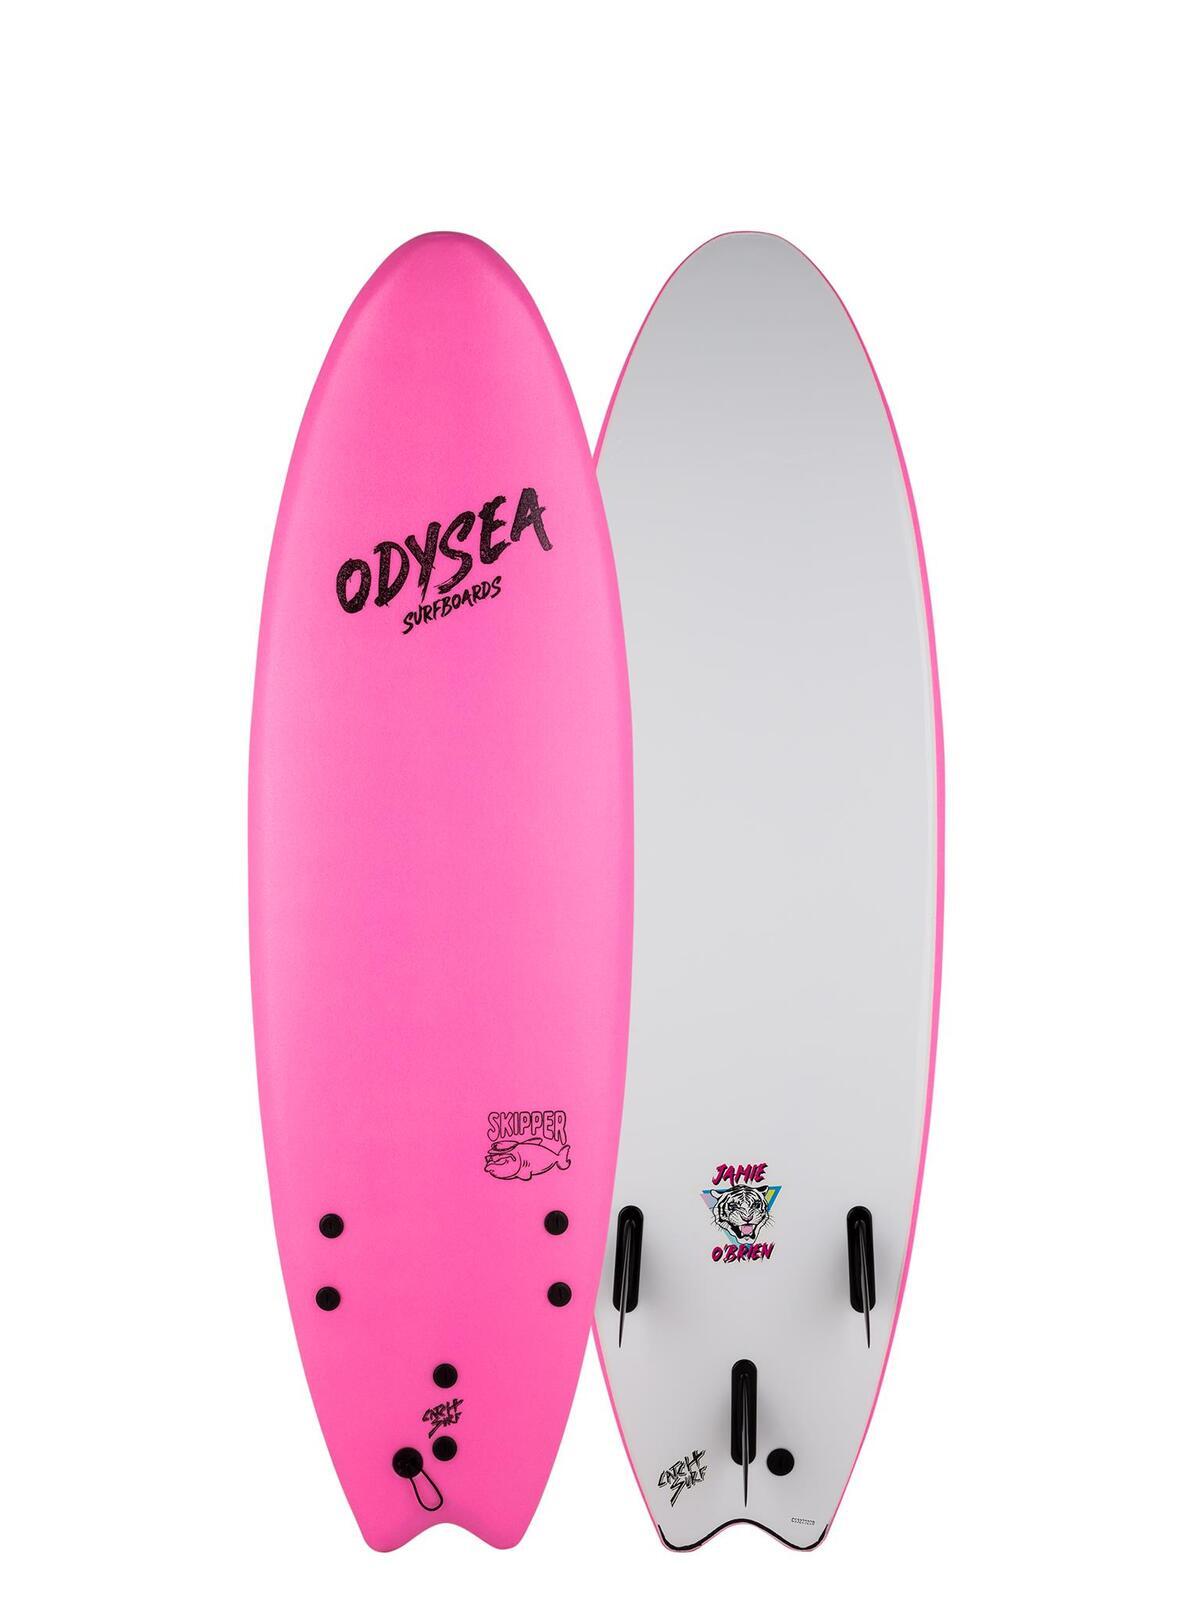 Catch Surf Odysea Skipper 5'6 Basic J.O.B Tri Fin. Designed for 